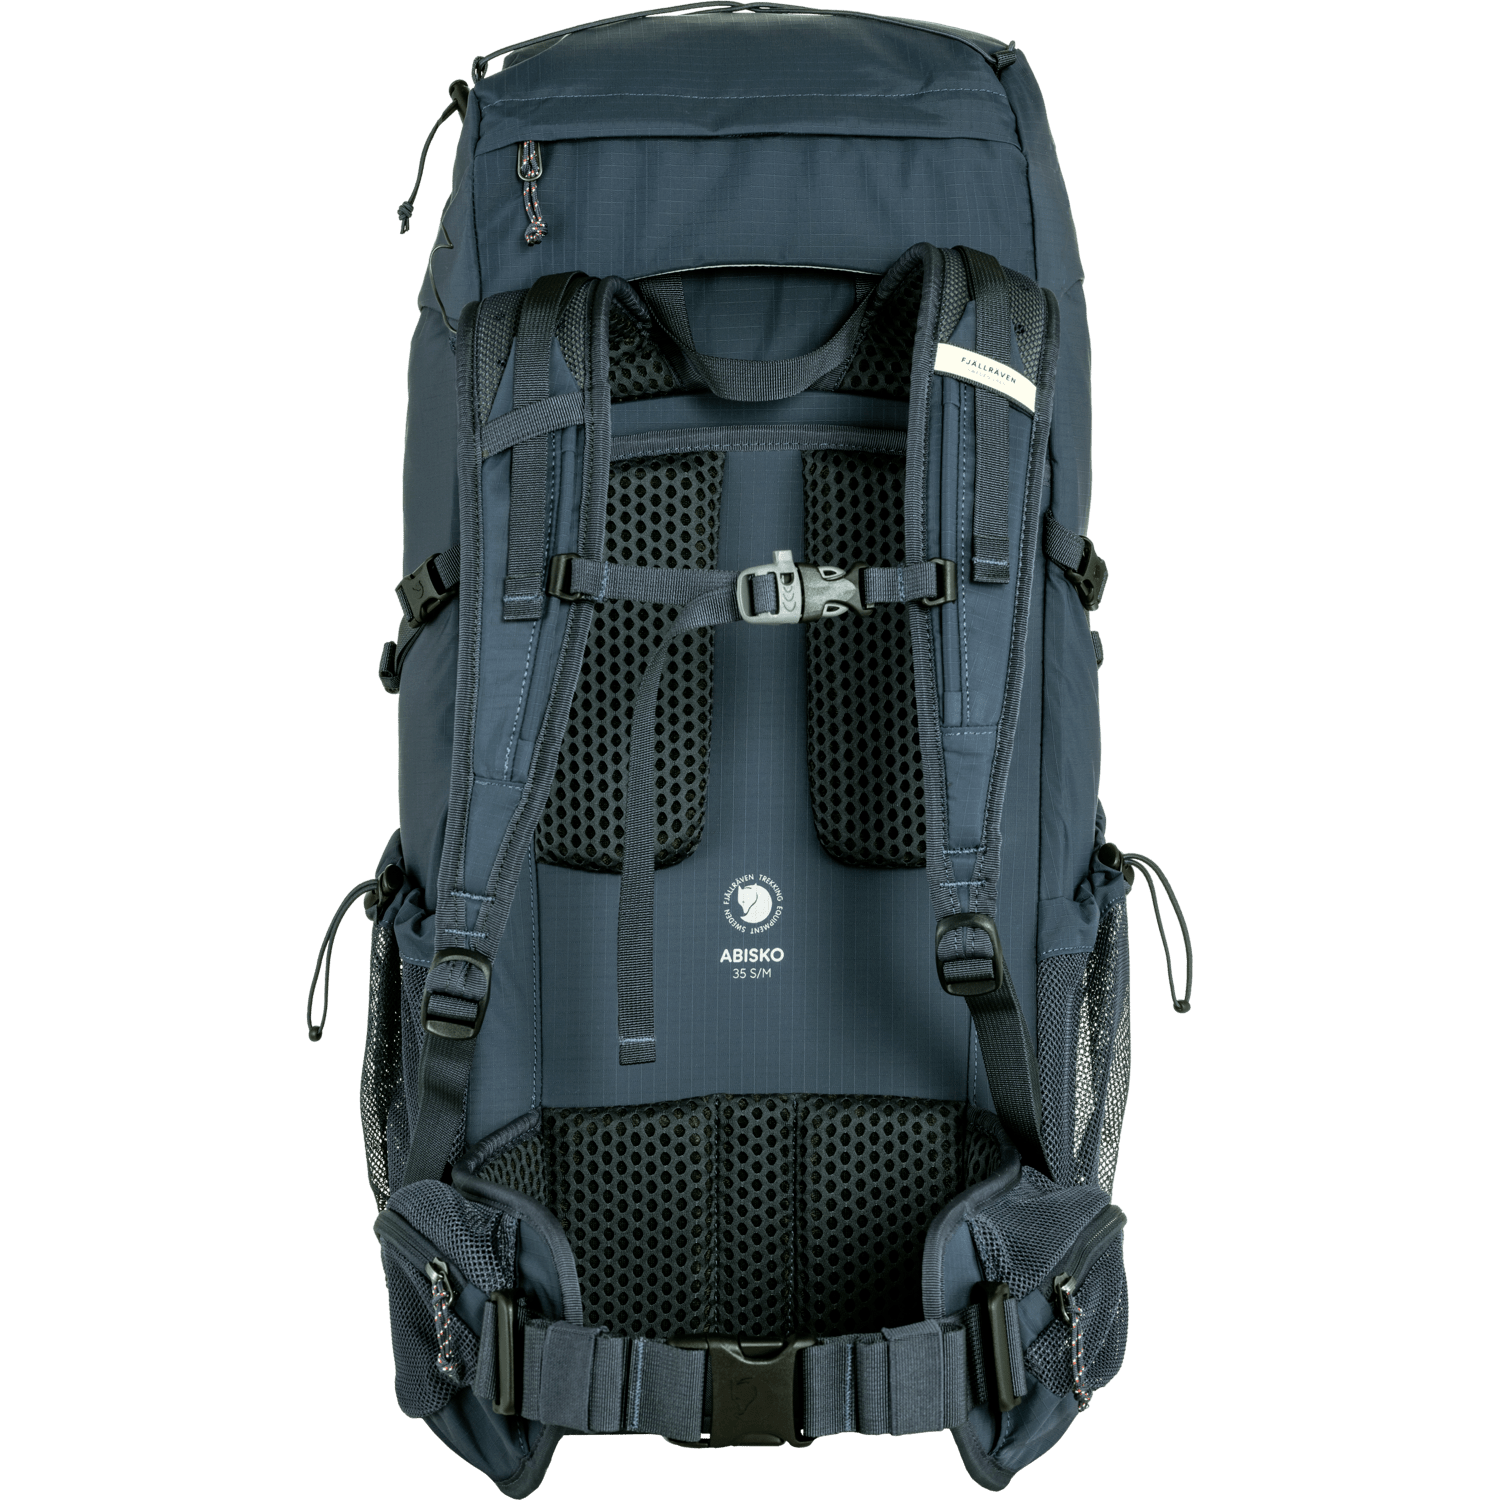 Fjällräven Abisko Hike 35 S/M - 100% Recycled Nylon Navy Bags